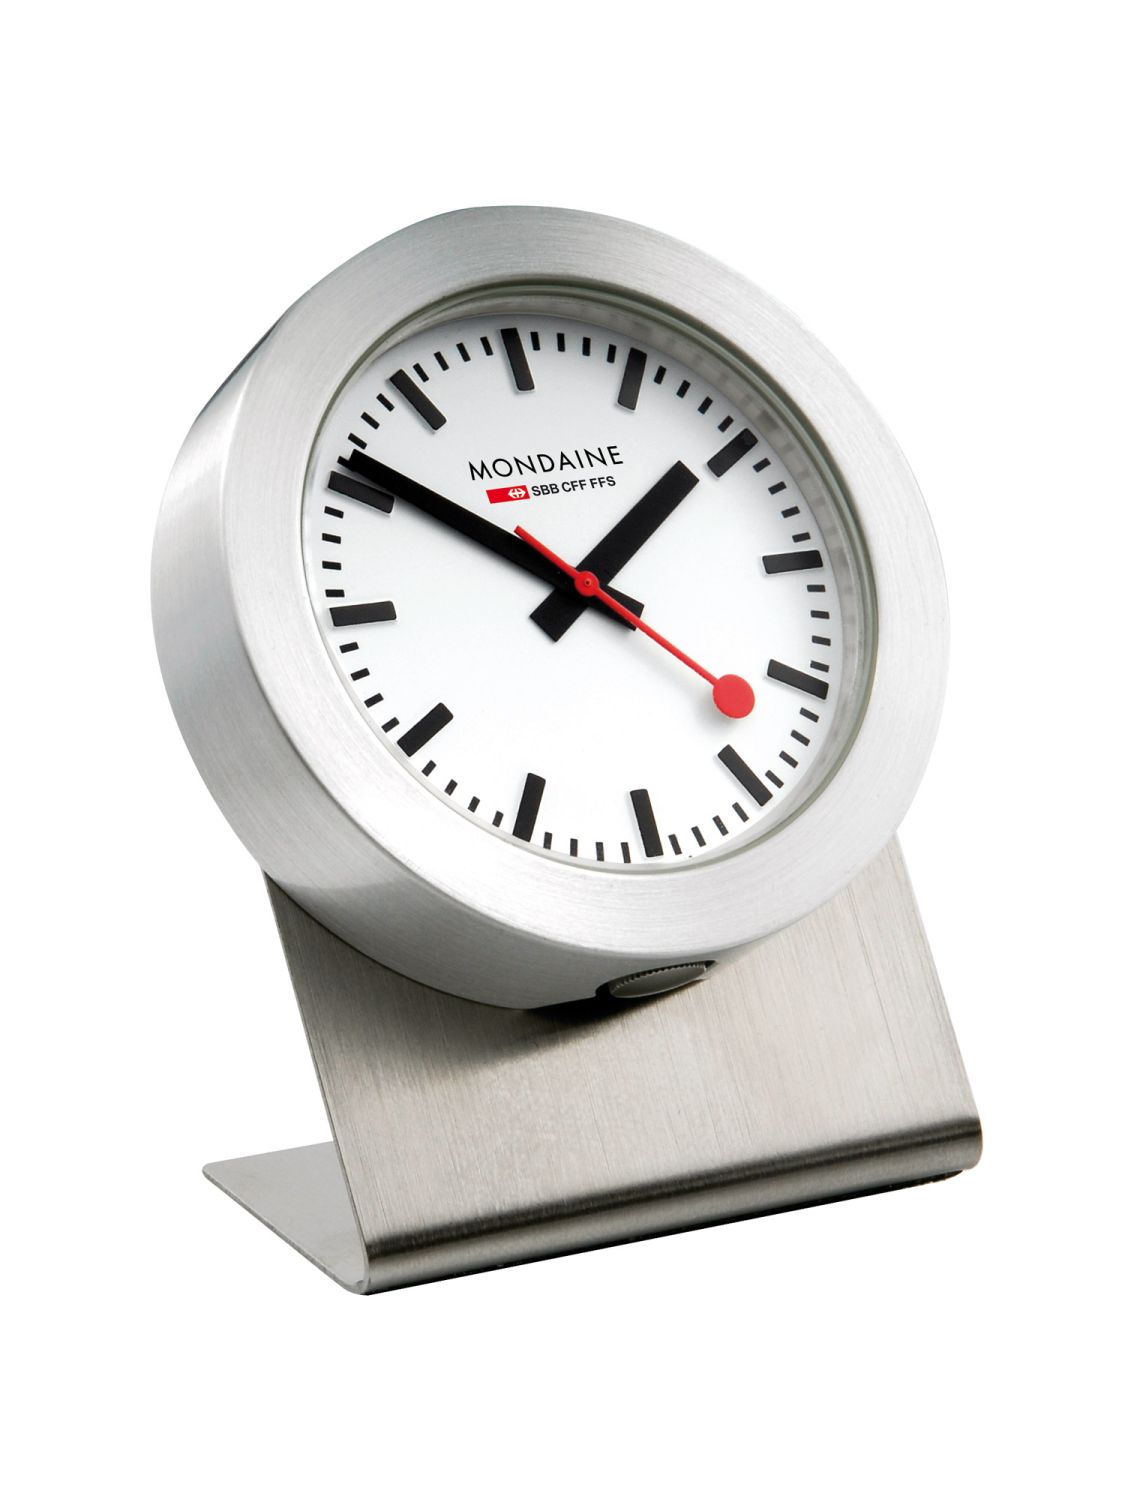 Magnet clock, 50mm, copper table and kitchen clock, A660.30318.82SBK –  Mondaine Schweiz